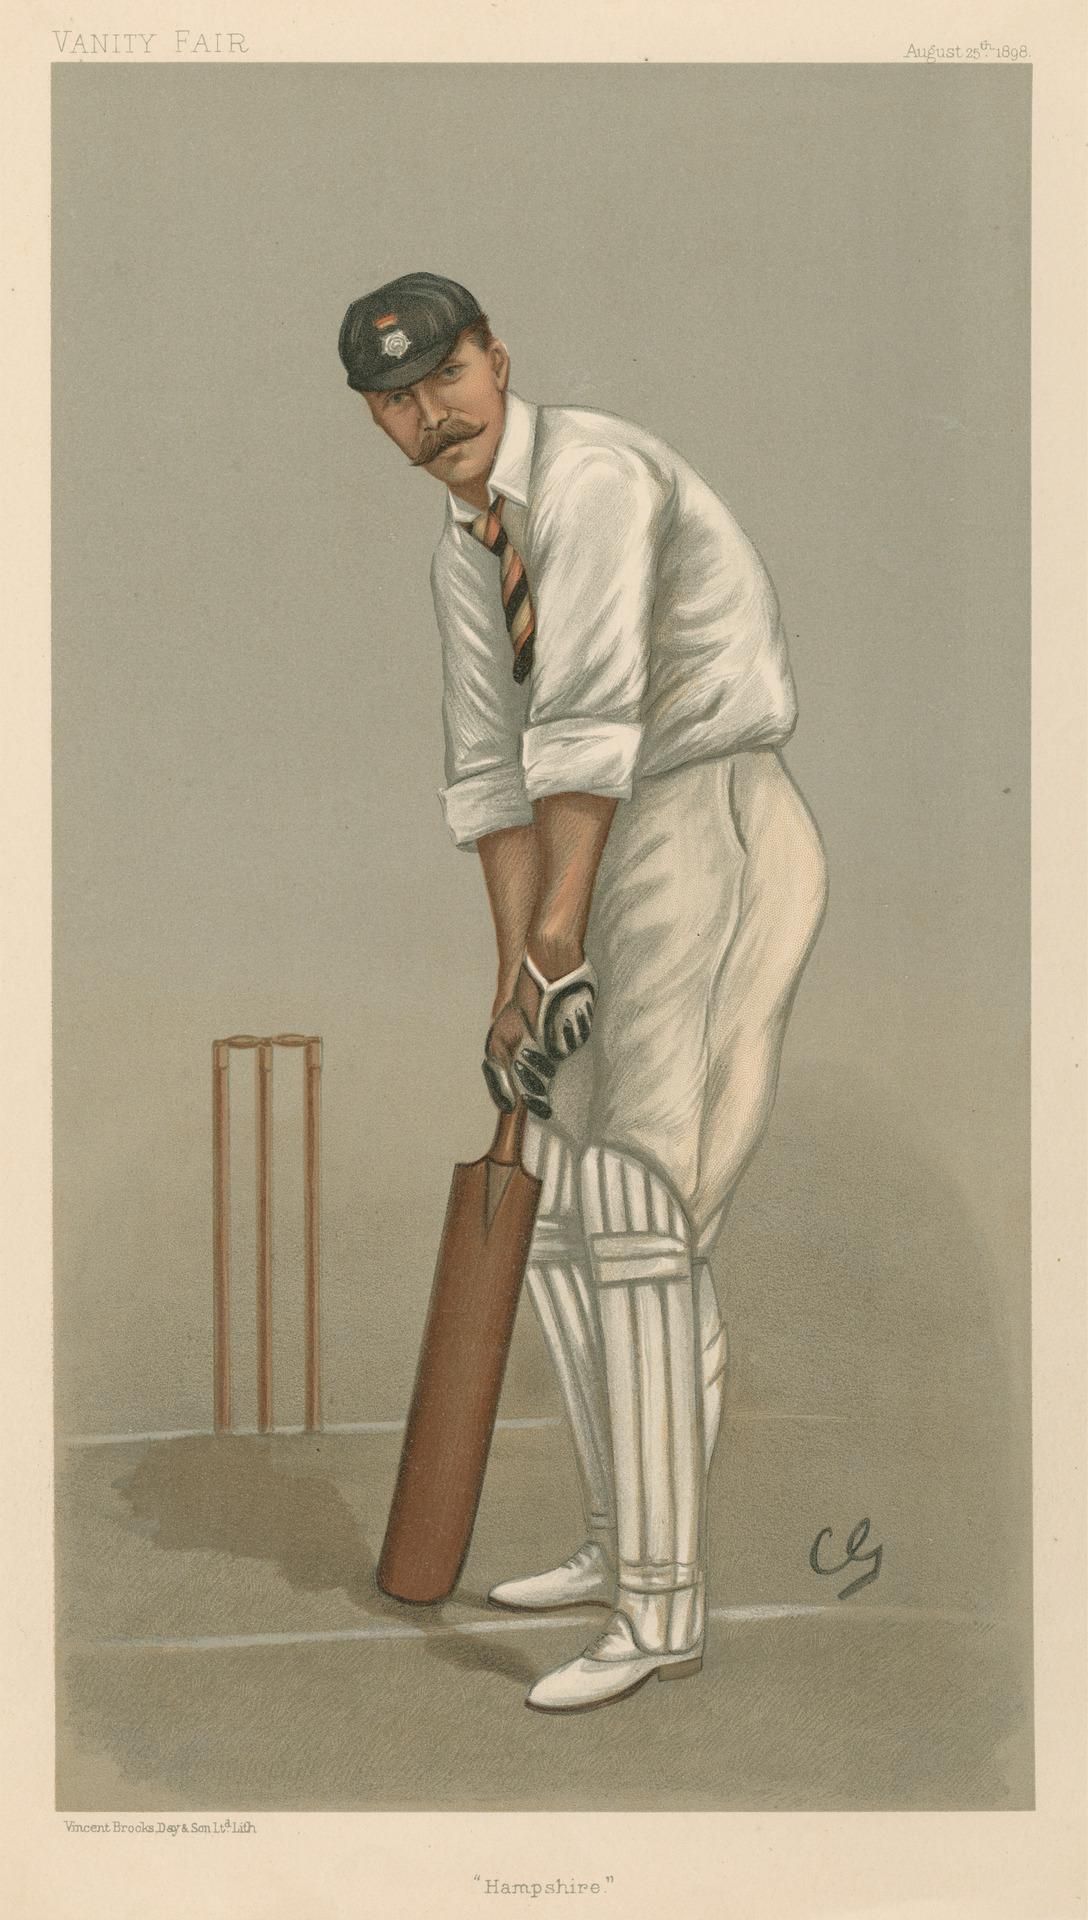 Vanity Fair - Cricket. 'Hampshire'. Captain Edward Wynyard. 25 August 1898